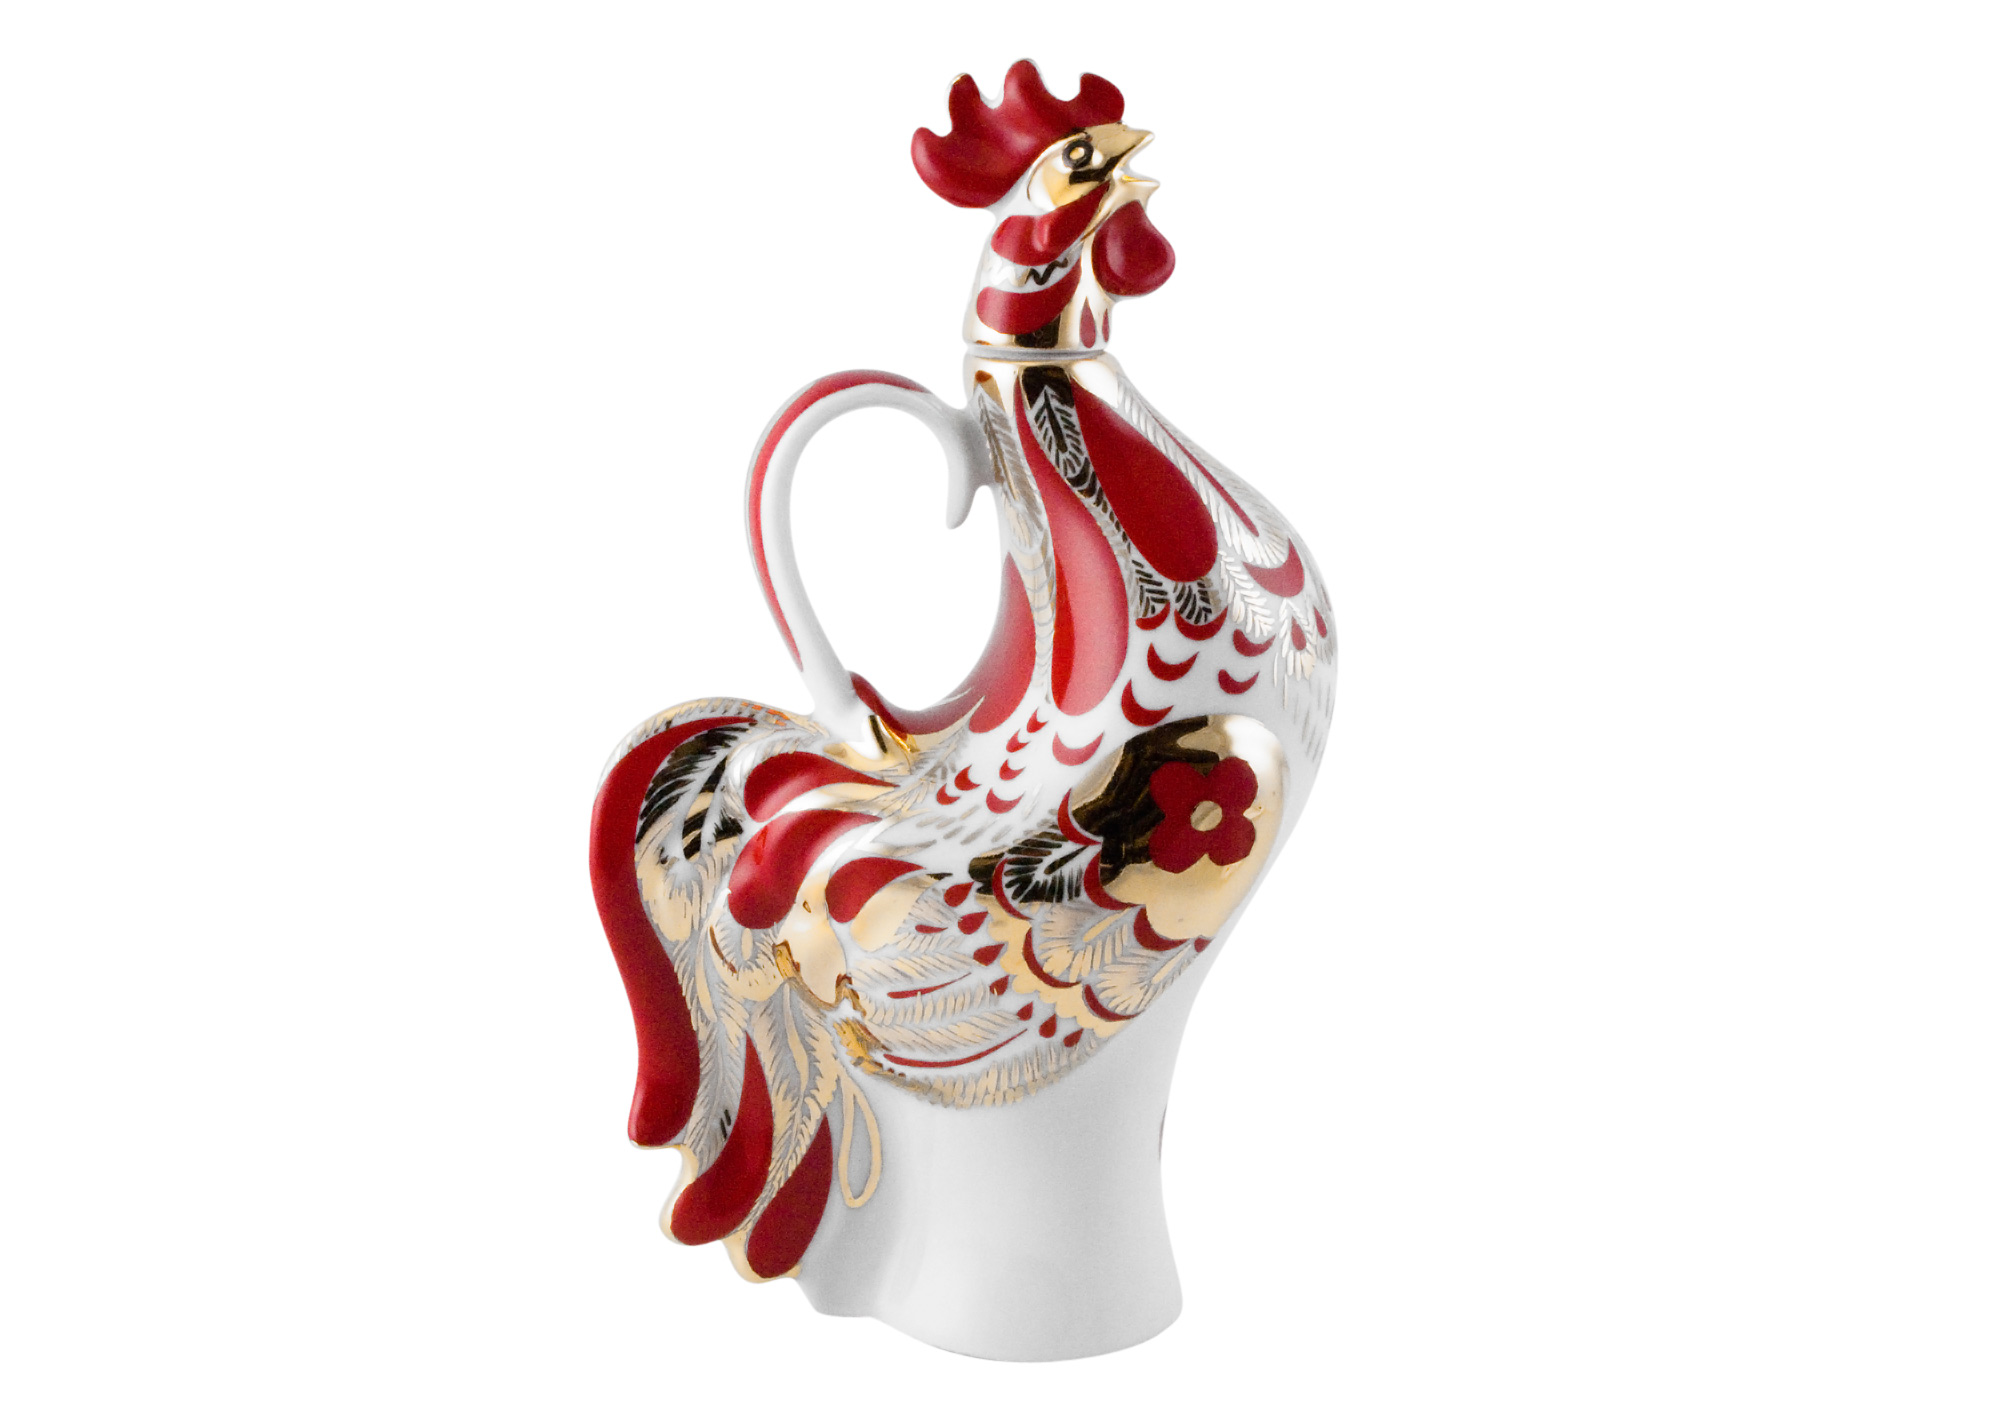 Buy Red Rooster Decanter at GoldenCockerel.com